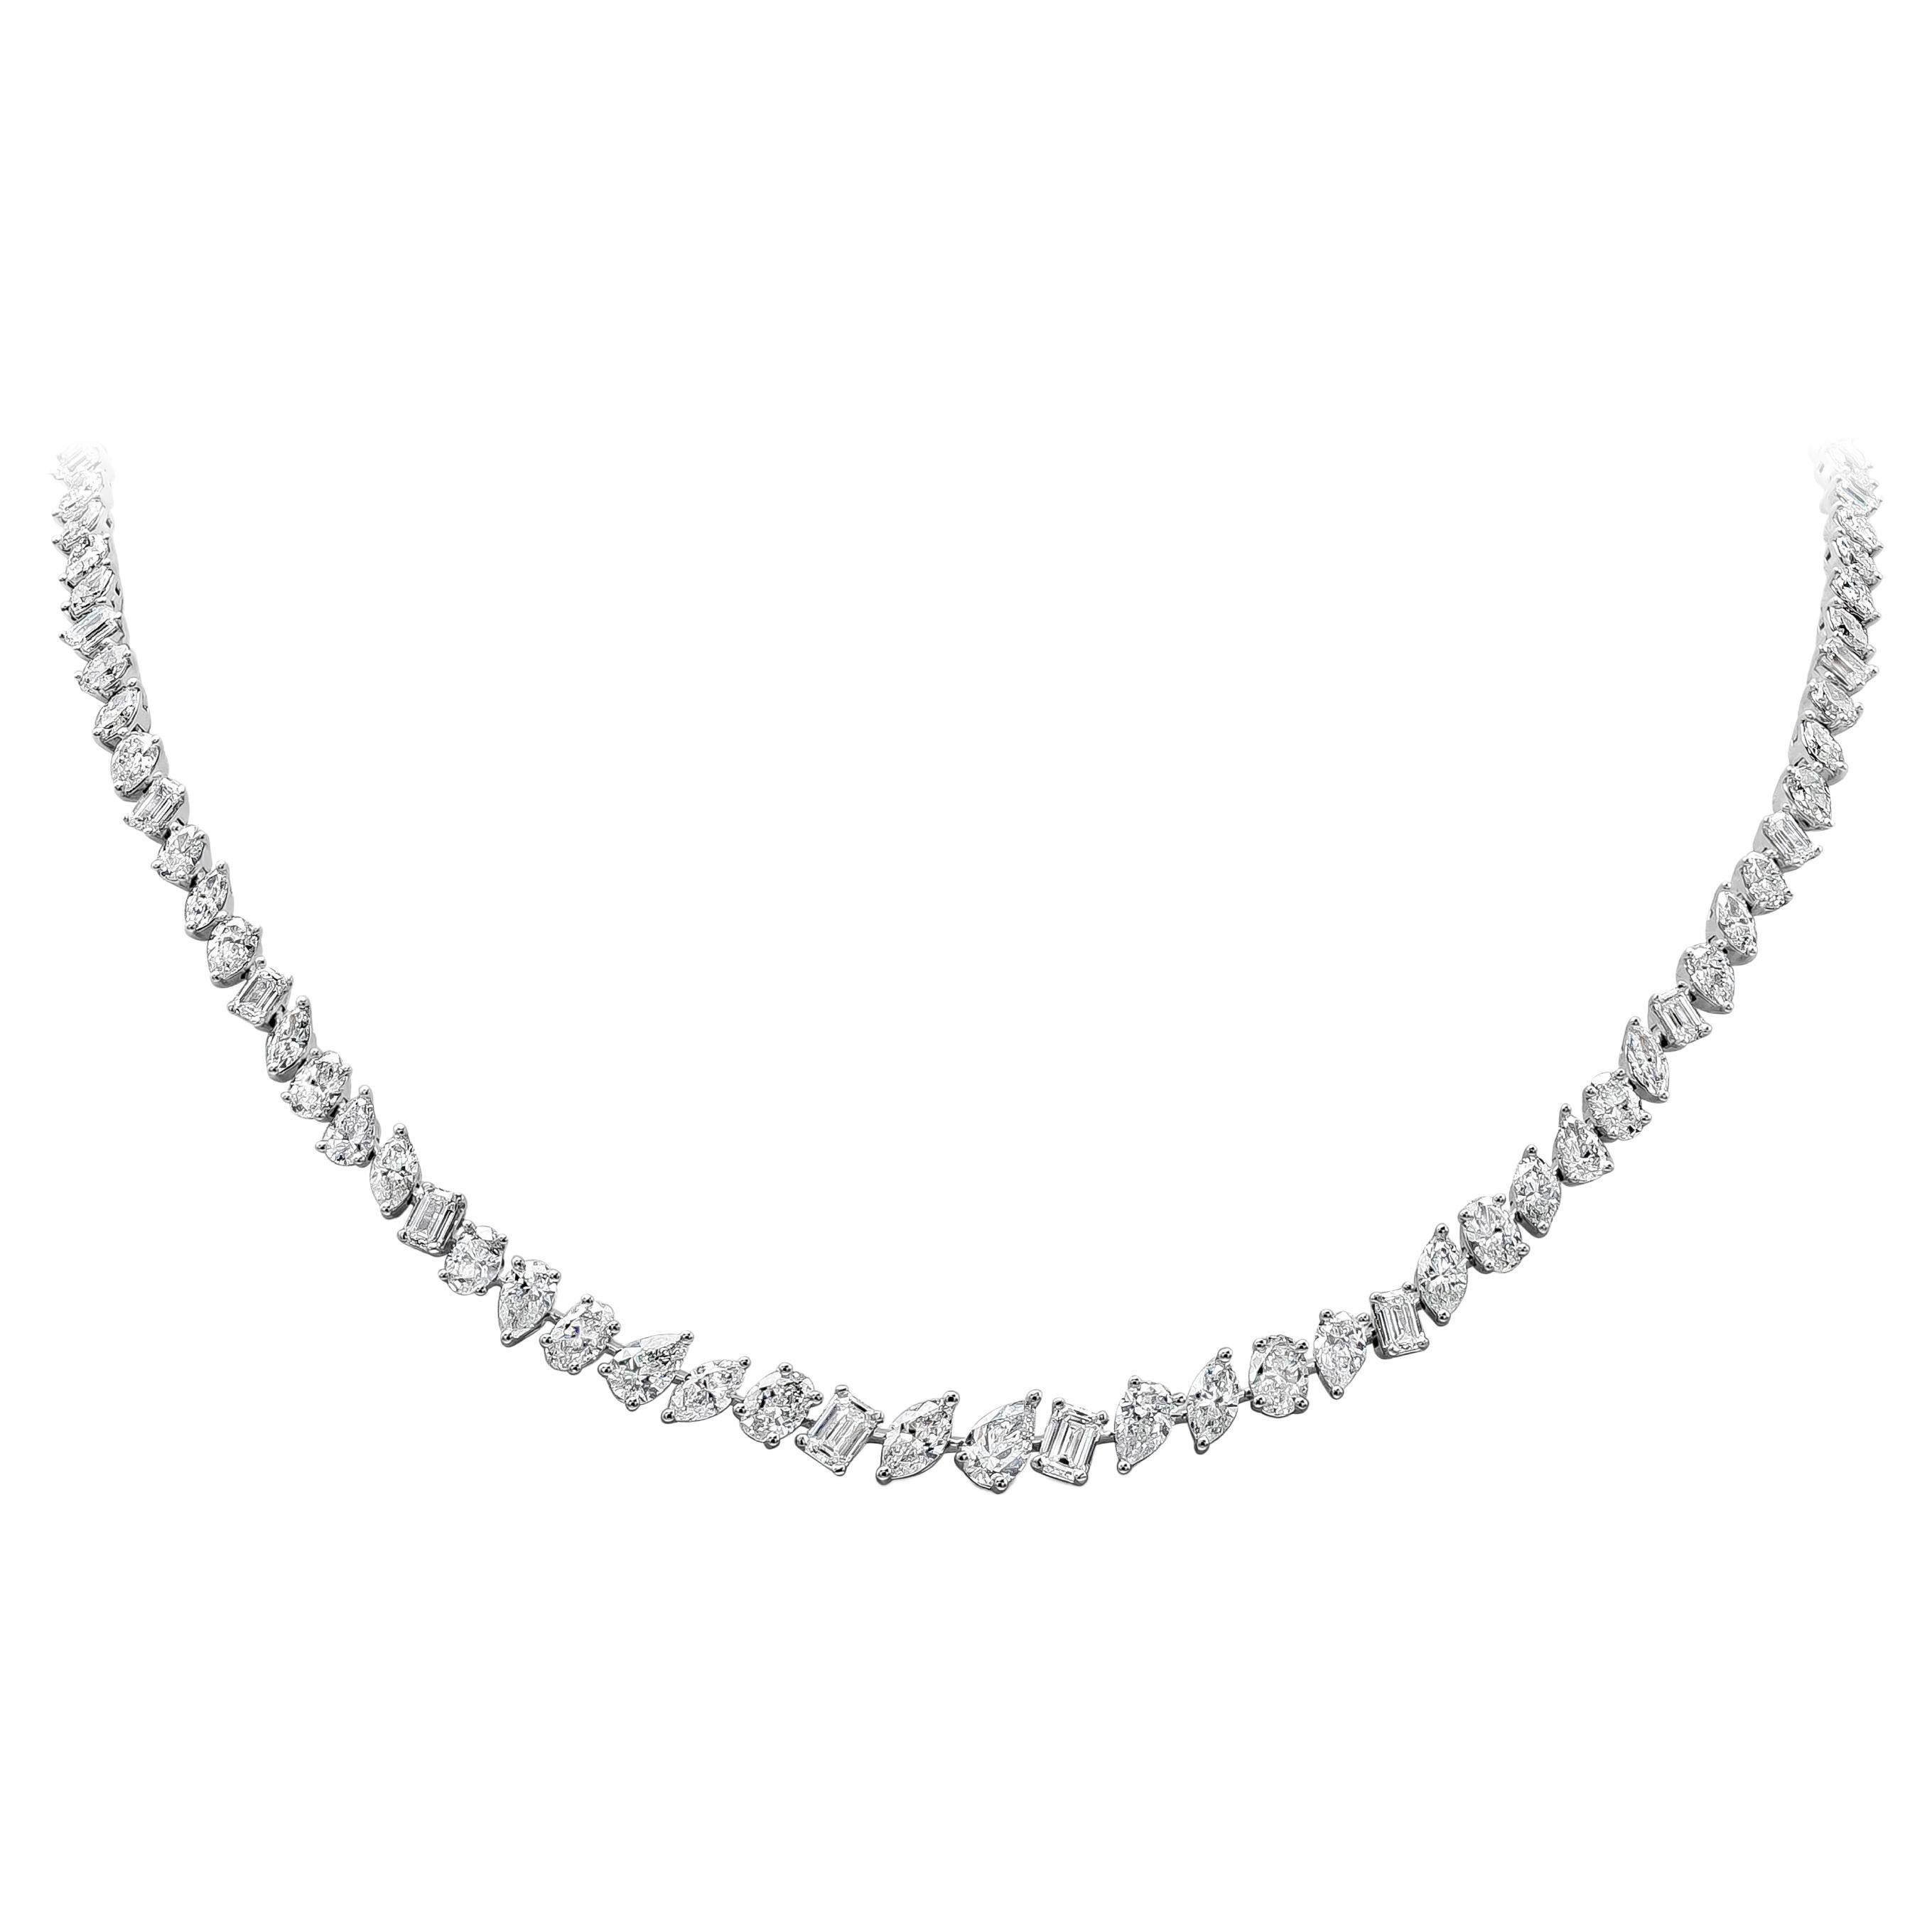 Roman Malakov 19.38 Carats Total Fancy Shape Mixed Cut Diamond Riviere Necklace For Sale